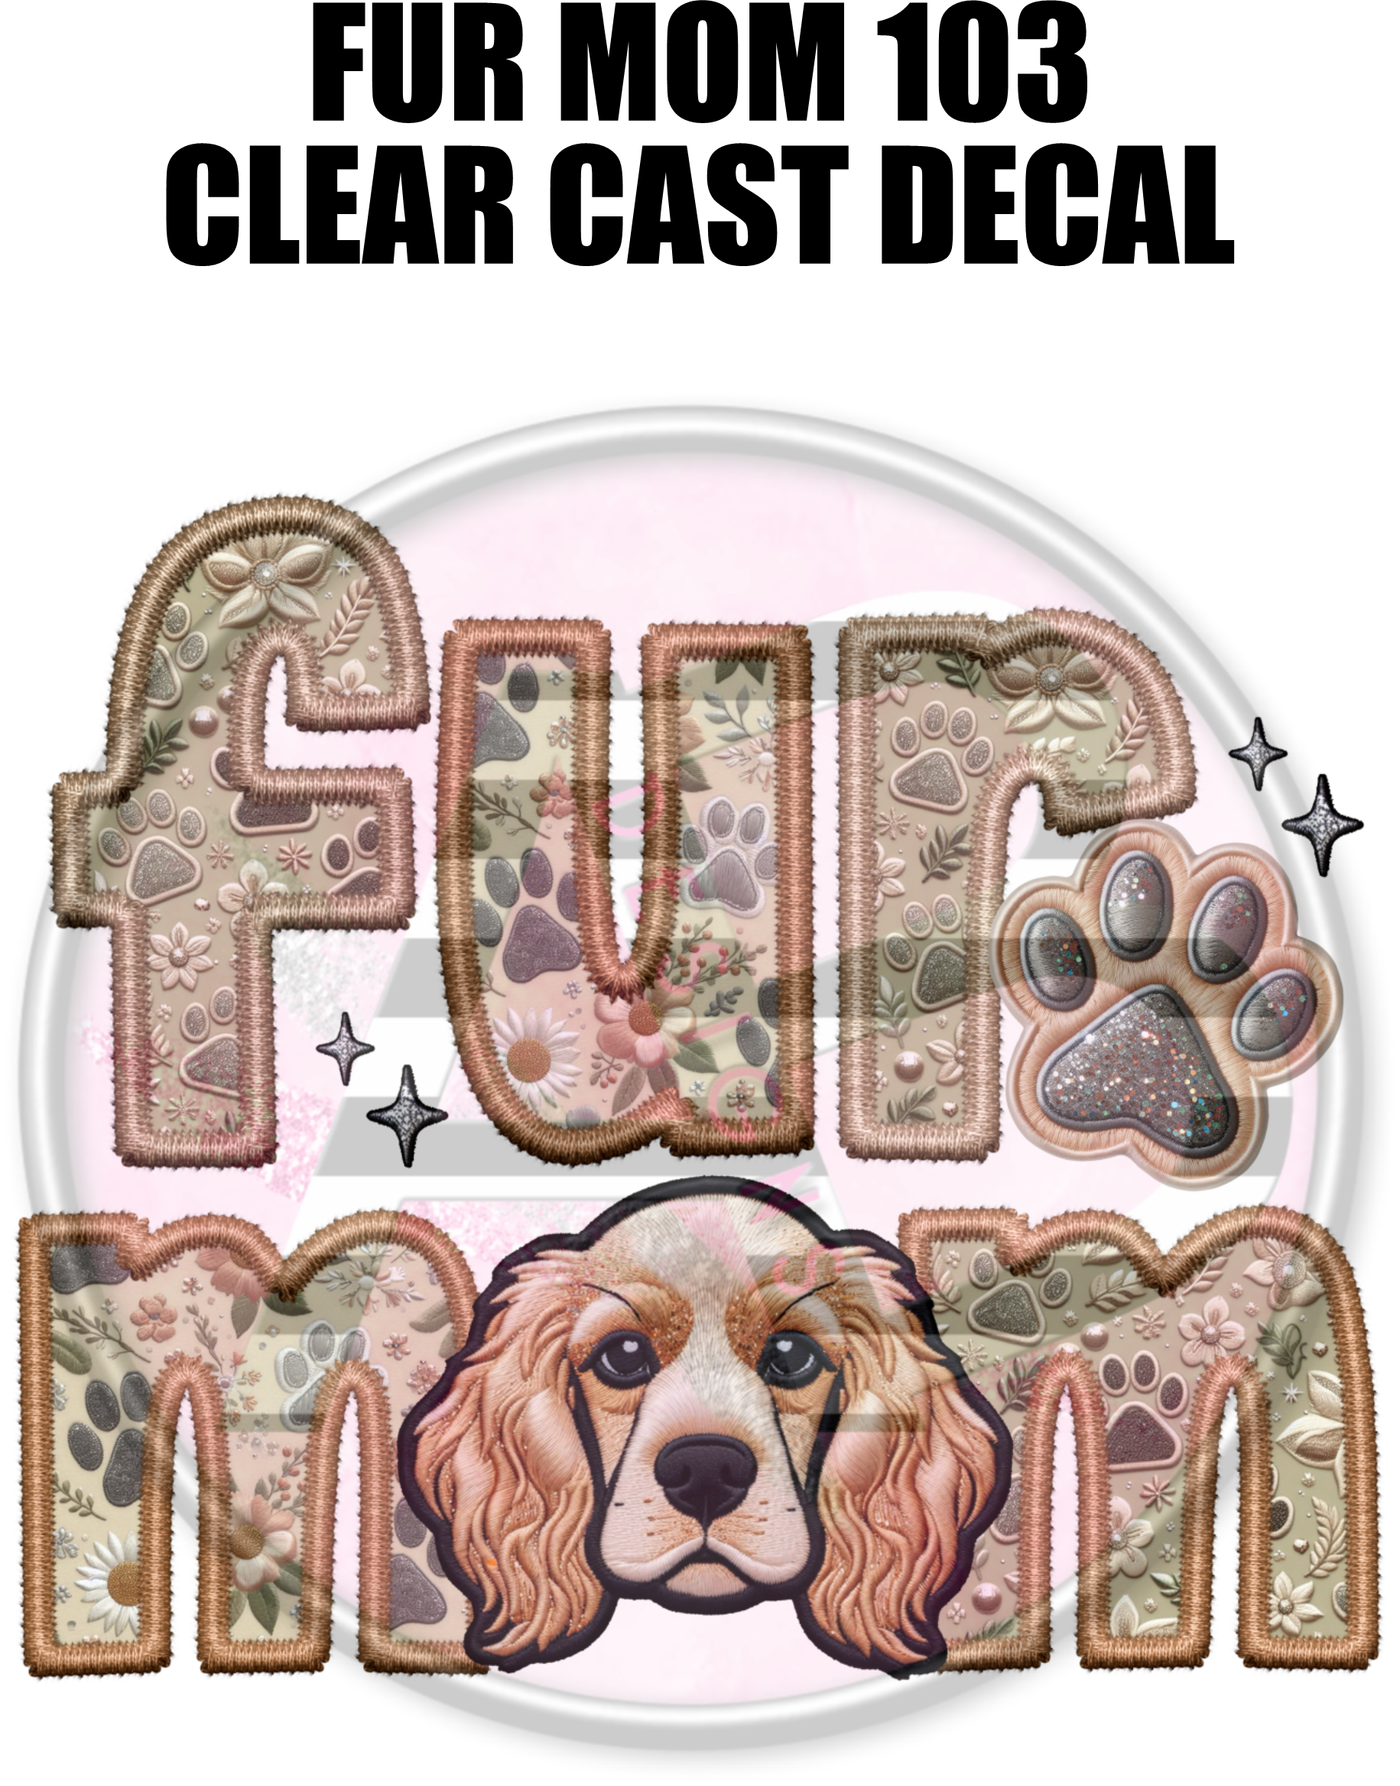 Fur Mom 103 - Clear Cast Decal